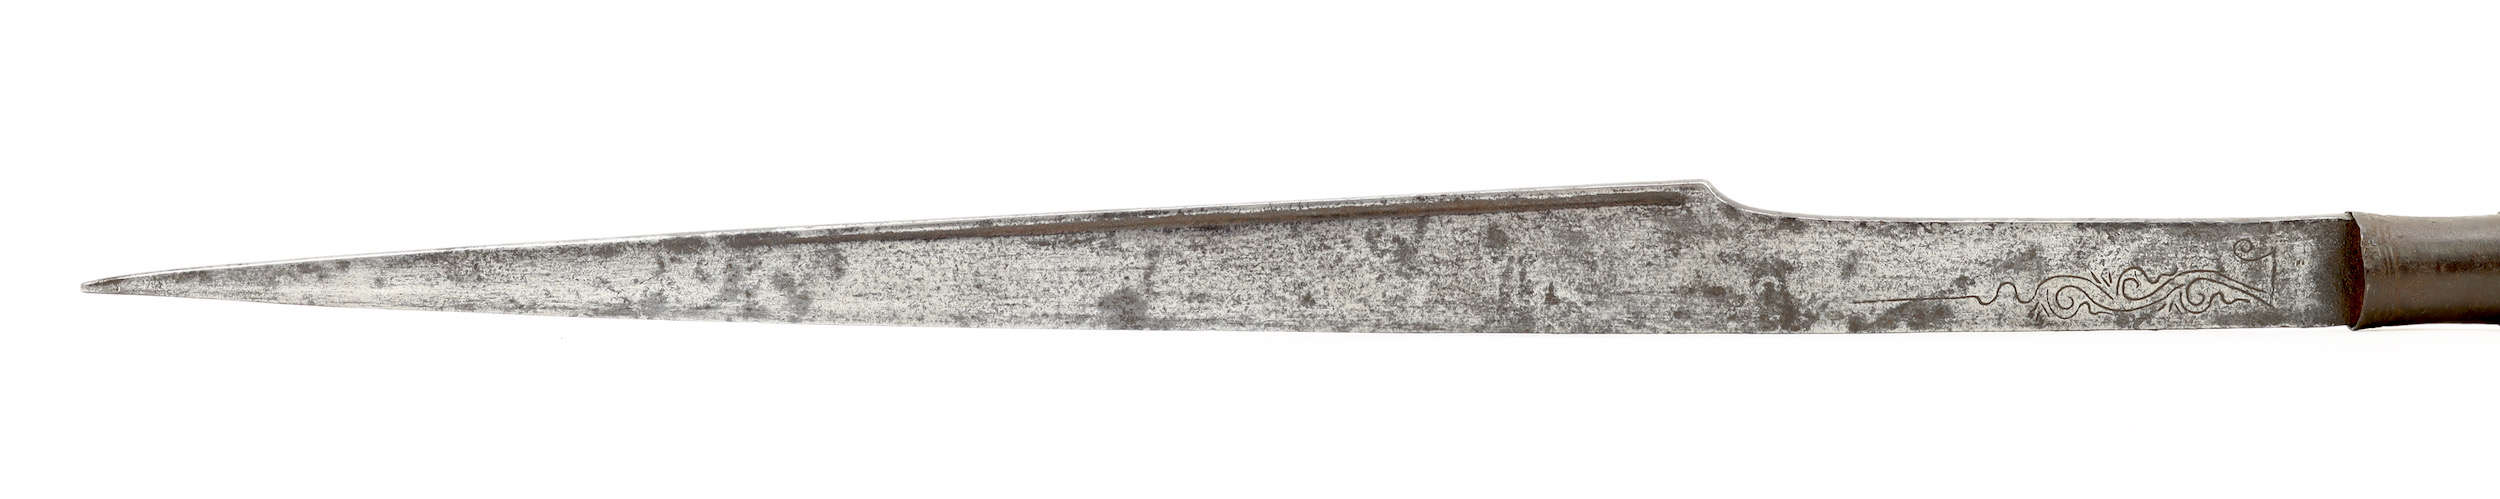 Antique Vietnamese spearhead